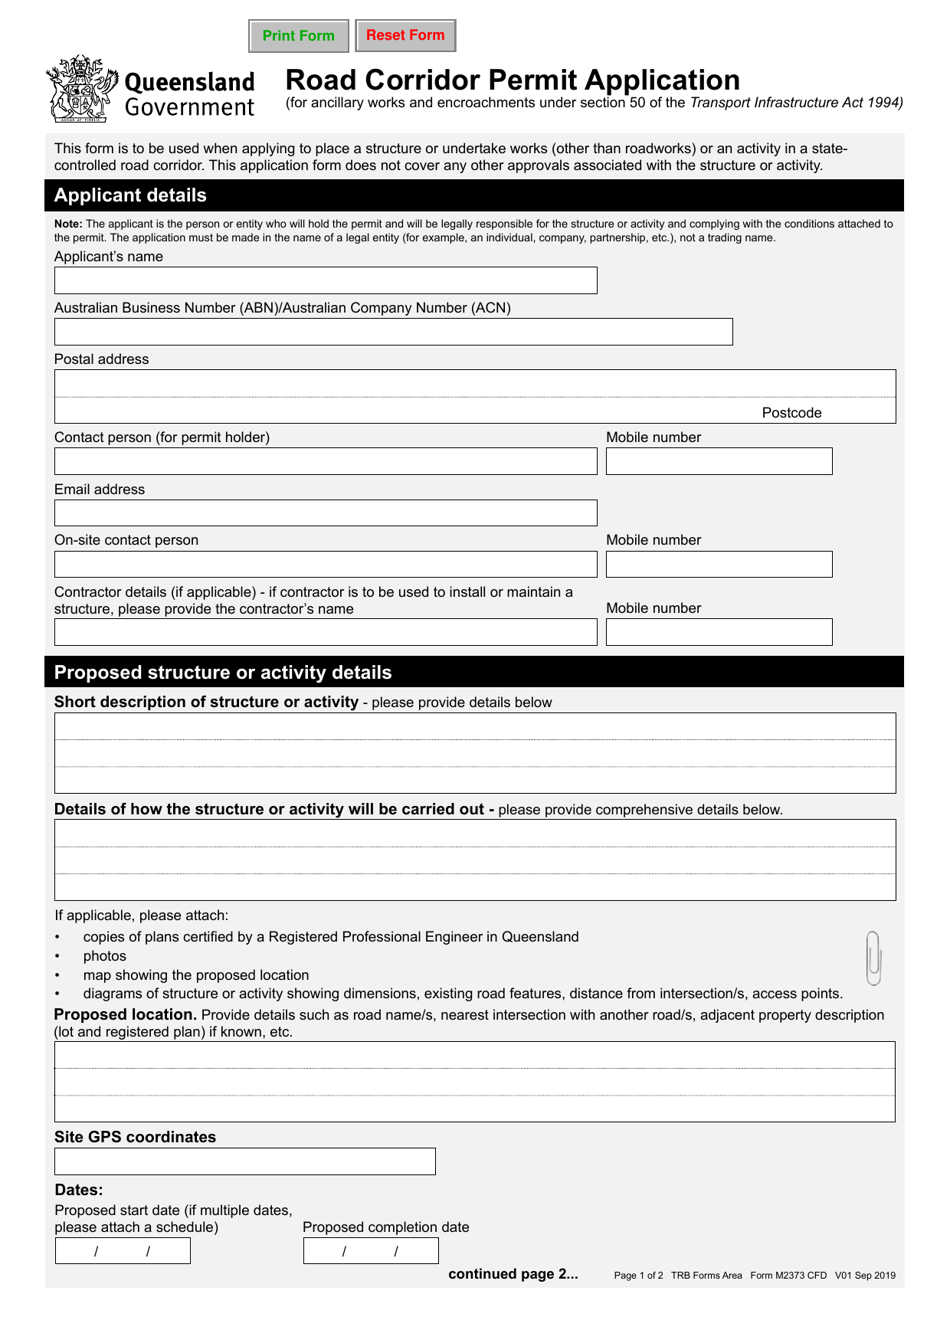 Form M2373 Road Corridor Permit Application - Queensland, Australia, Page 1